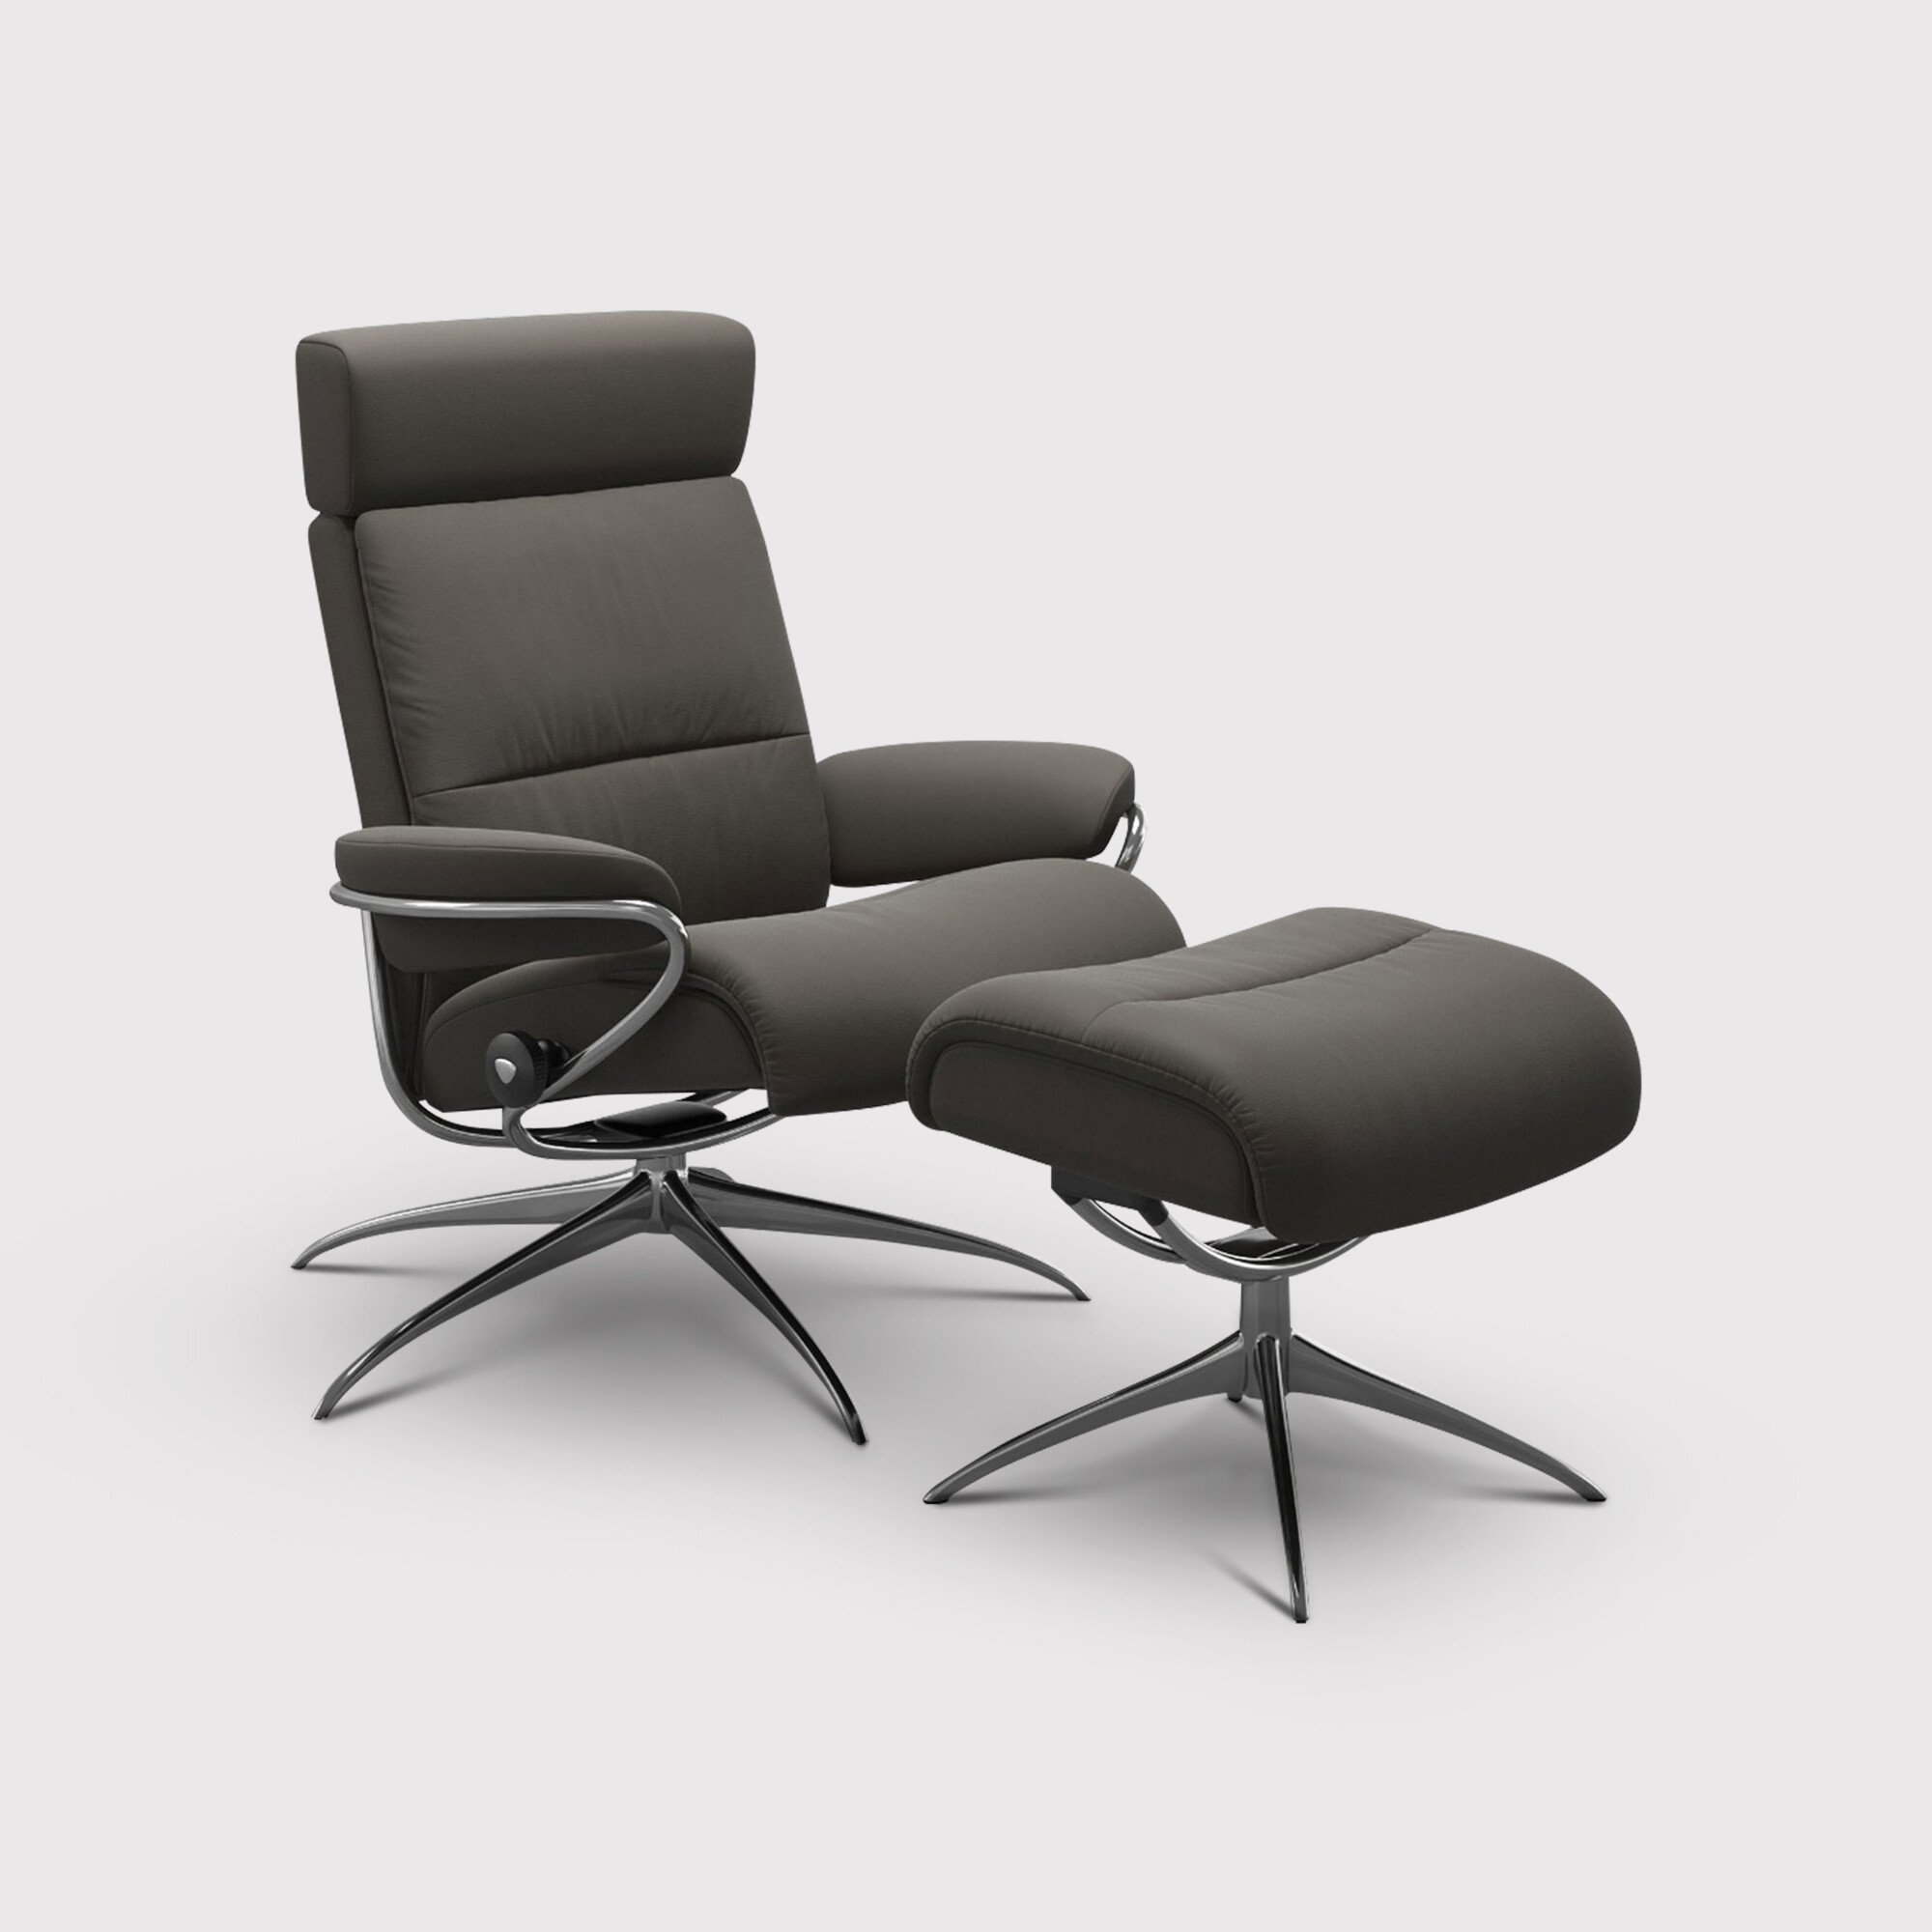 Stressless Tokyo Recliner Chair Adjustable Headrest & Stool, Grey Leather | Barker & Stonehouse